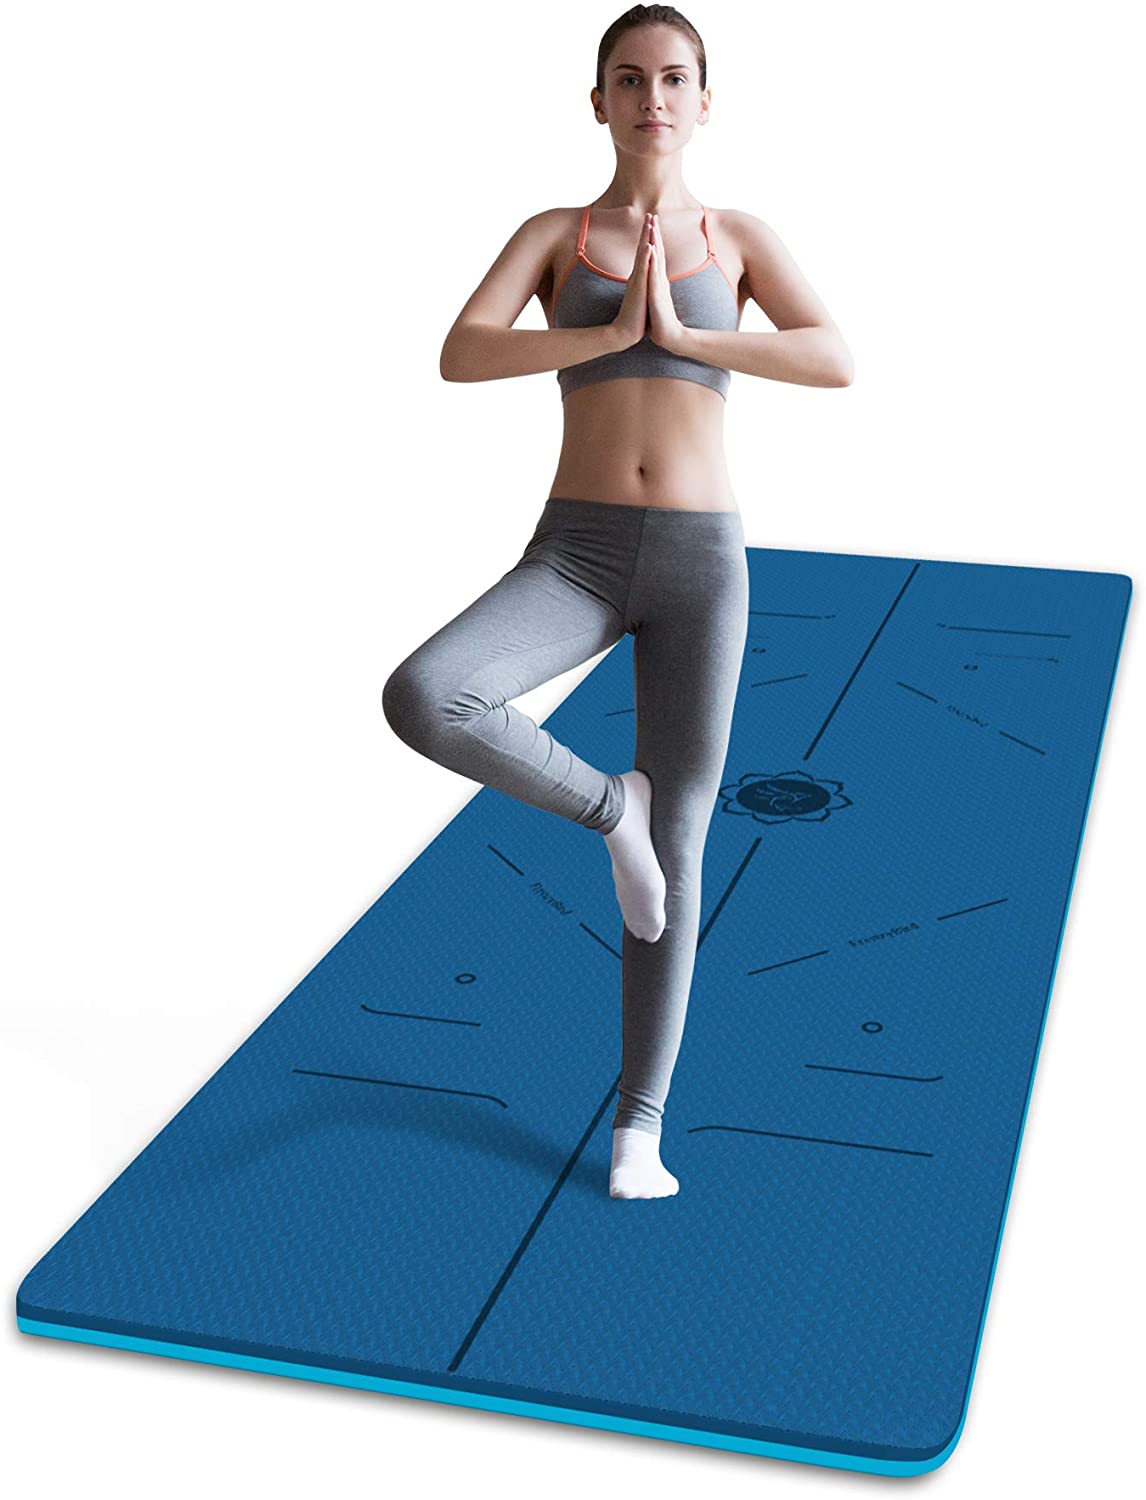  Hatha Yoga 4/5 inch TPE Yoga Mat Fitness & Exercise